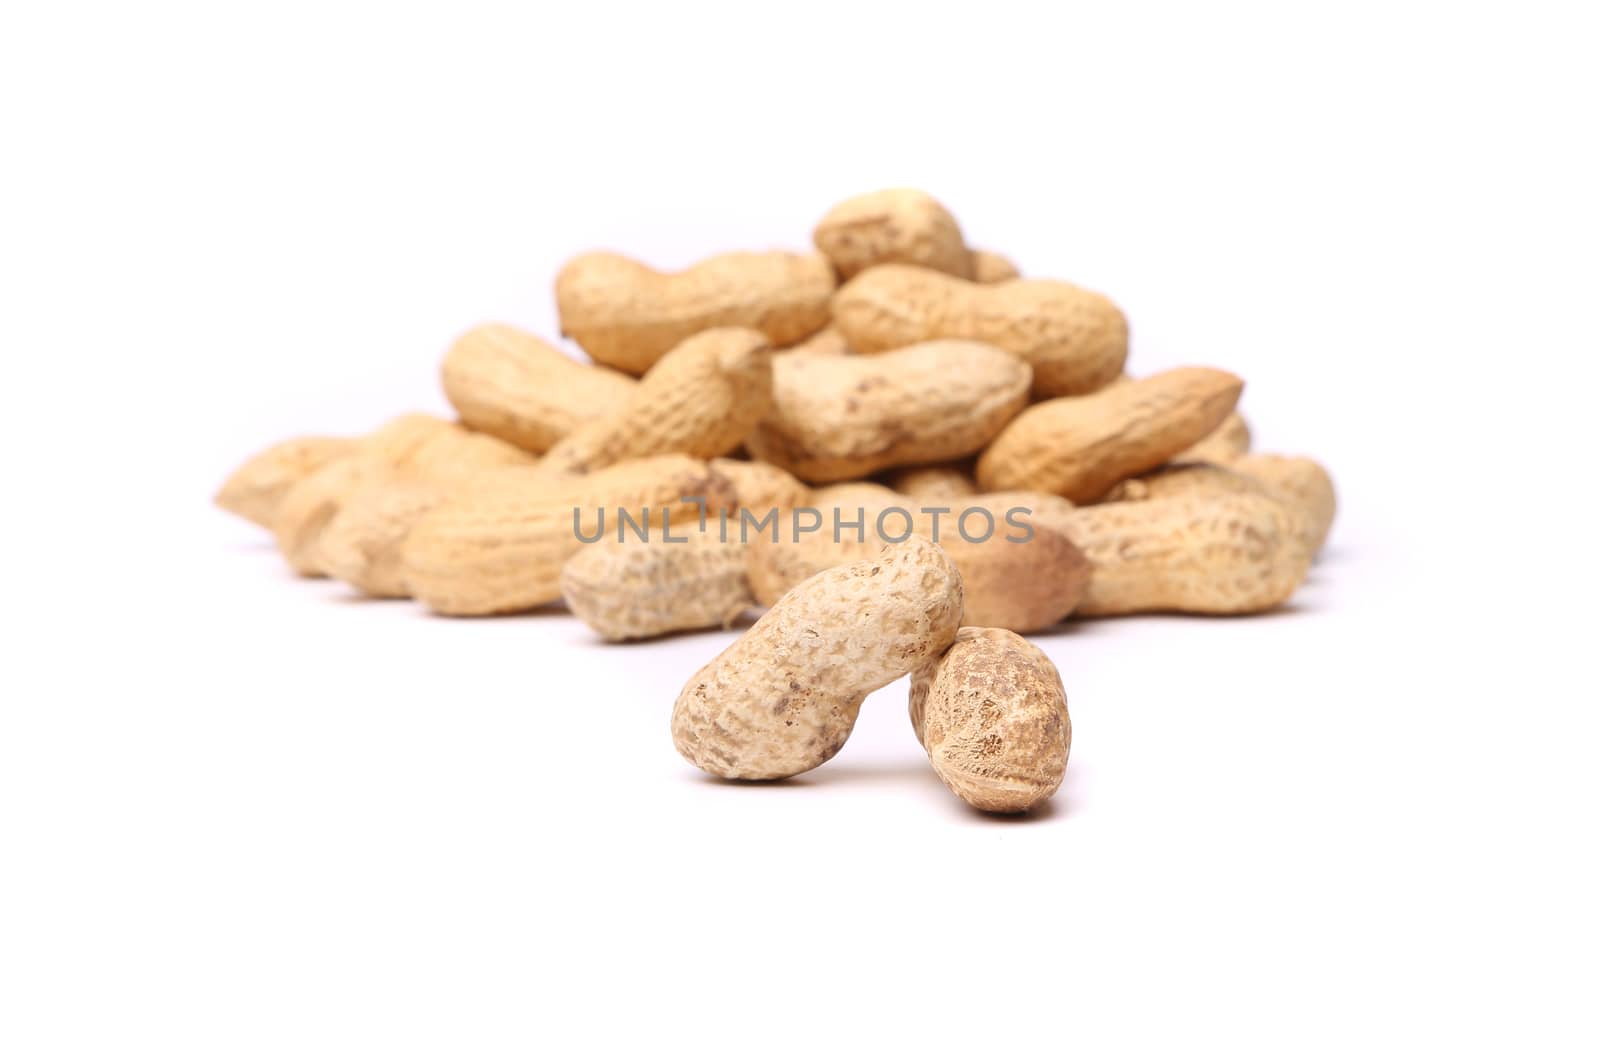 Two peanuts in closeup by indigolotos